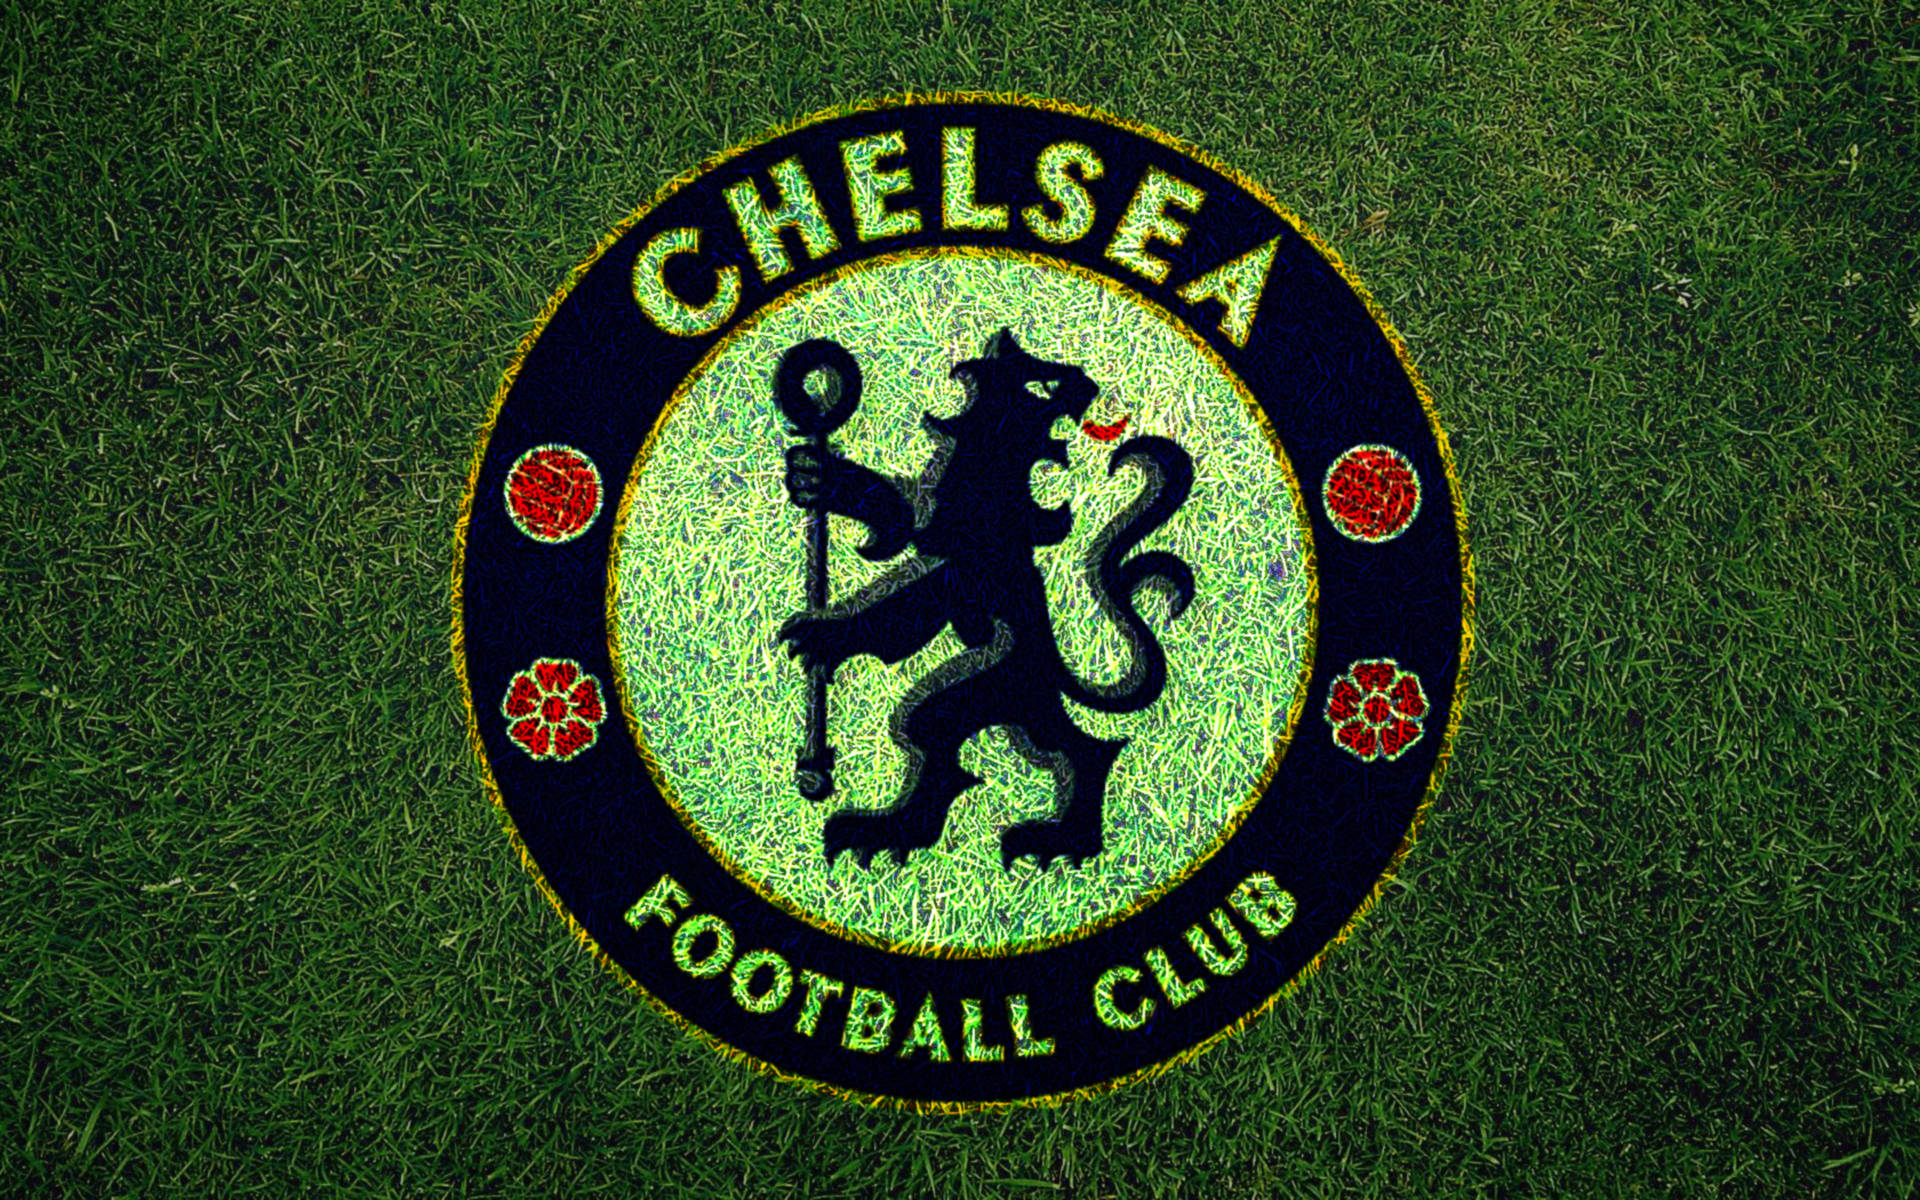 Chelsea Logo On Grass Background